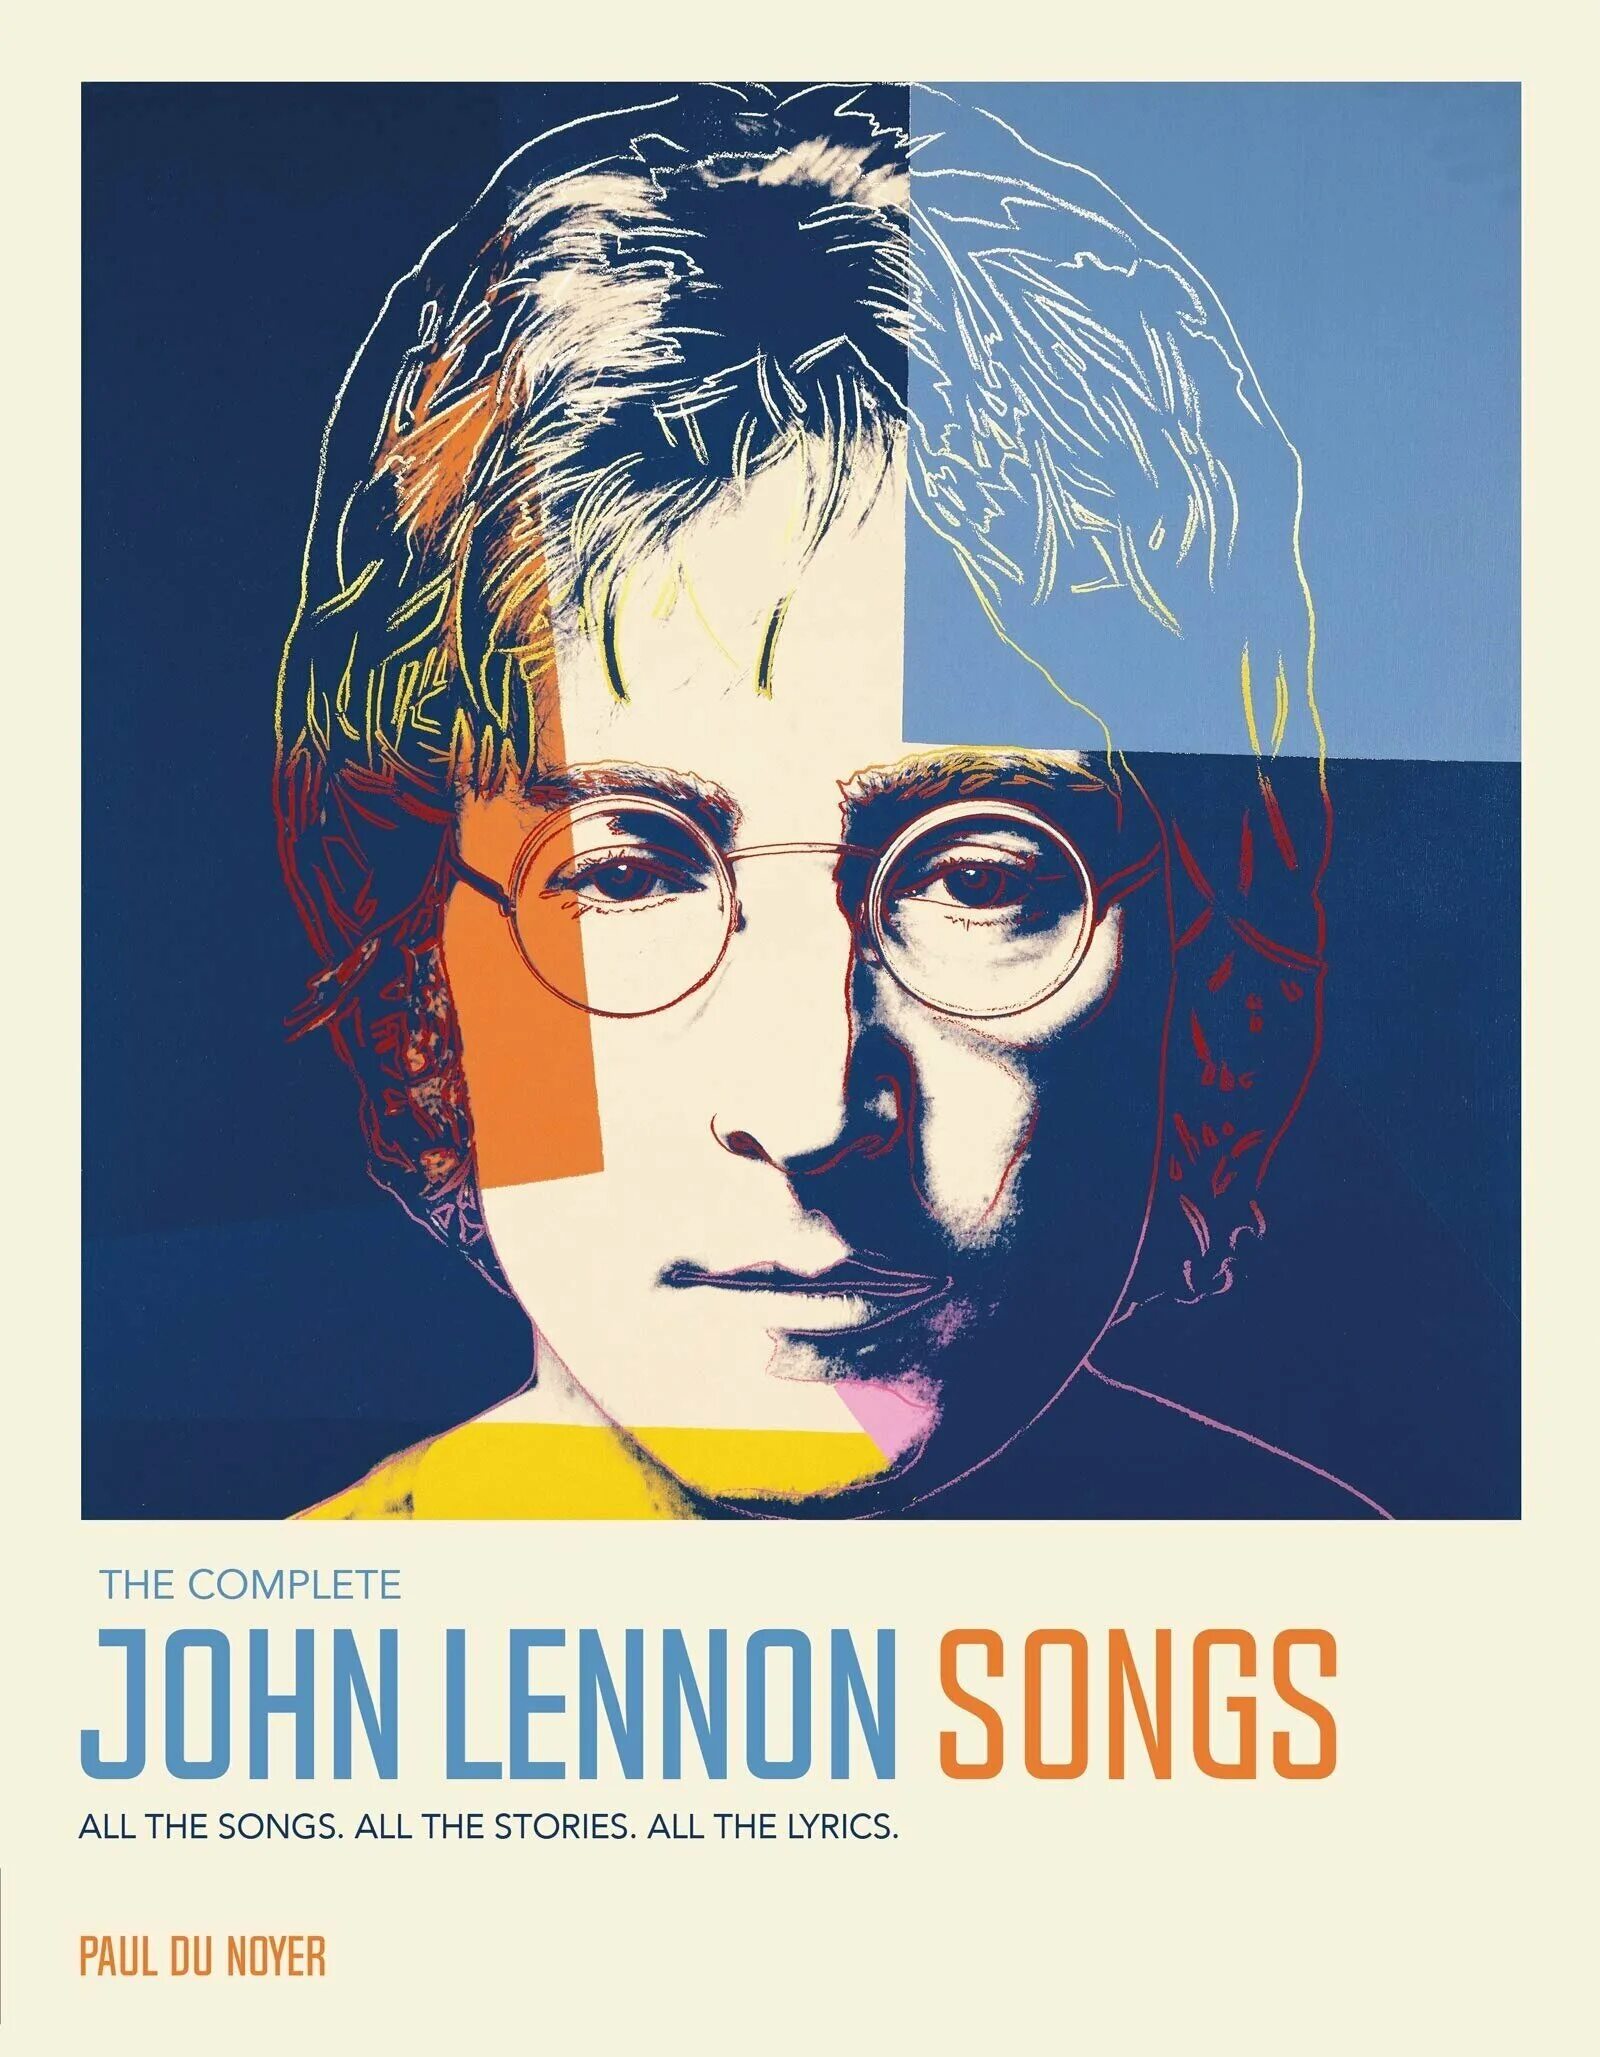 Paul lyrics. Джон Леннон портрет. Джон Леннон плакат. Джон Леннон в живописи. Джон Леннон песни.